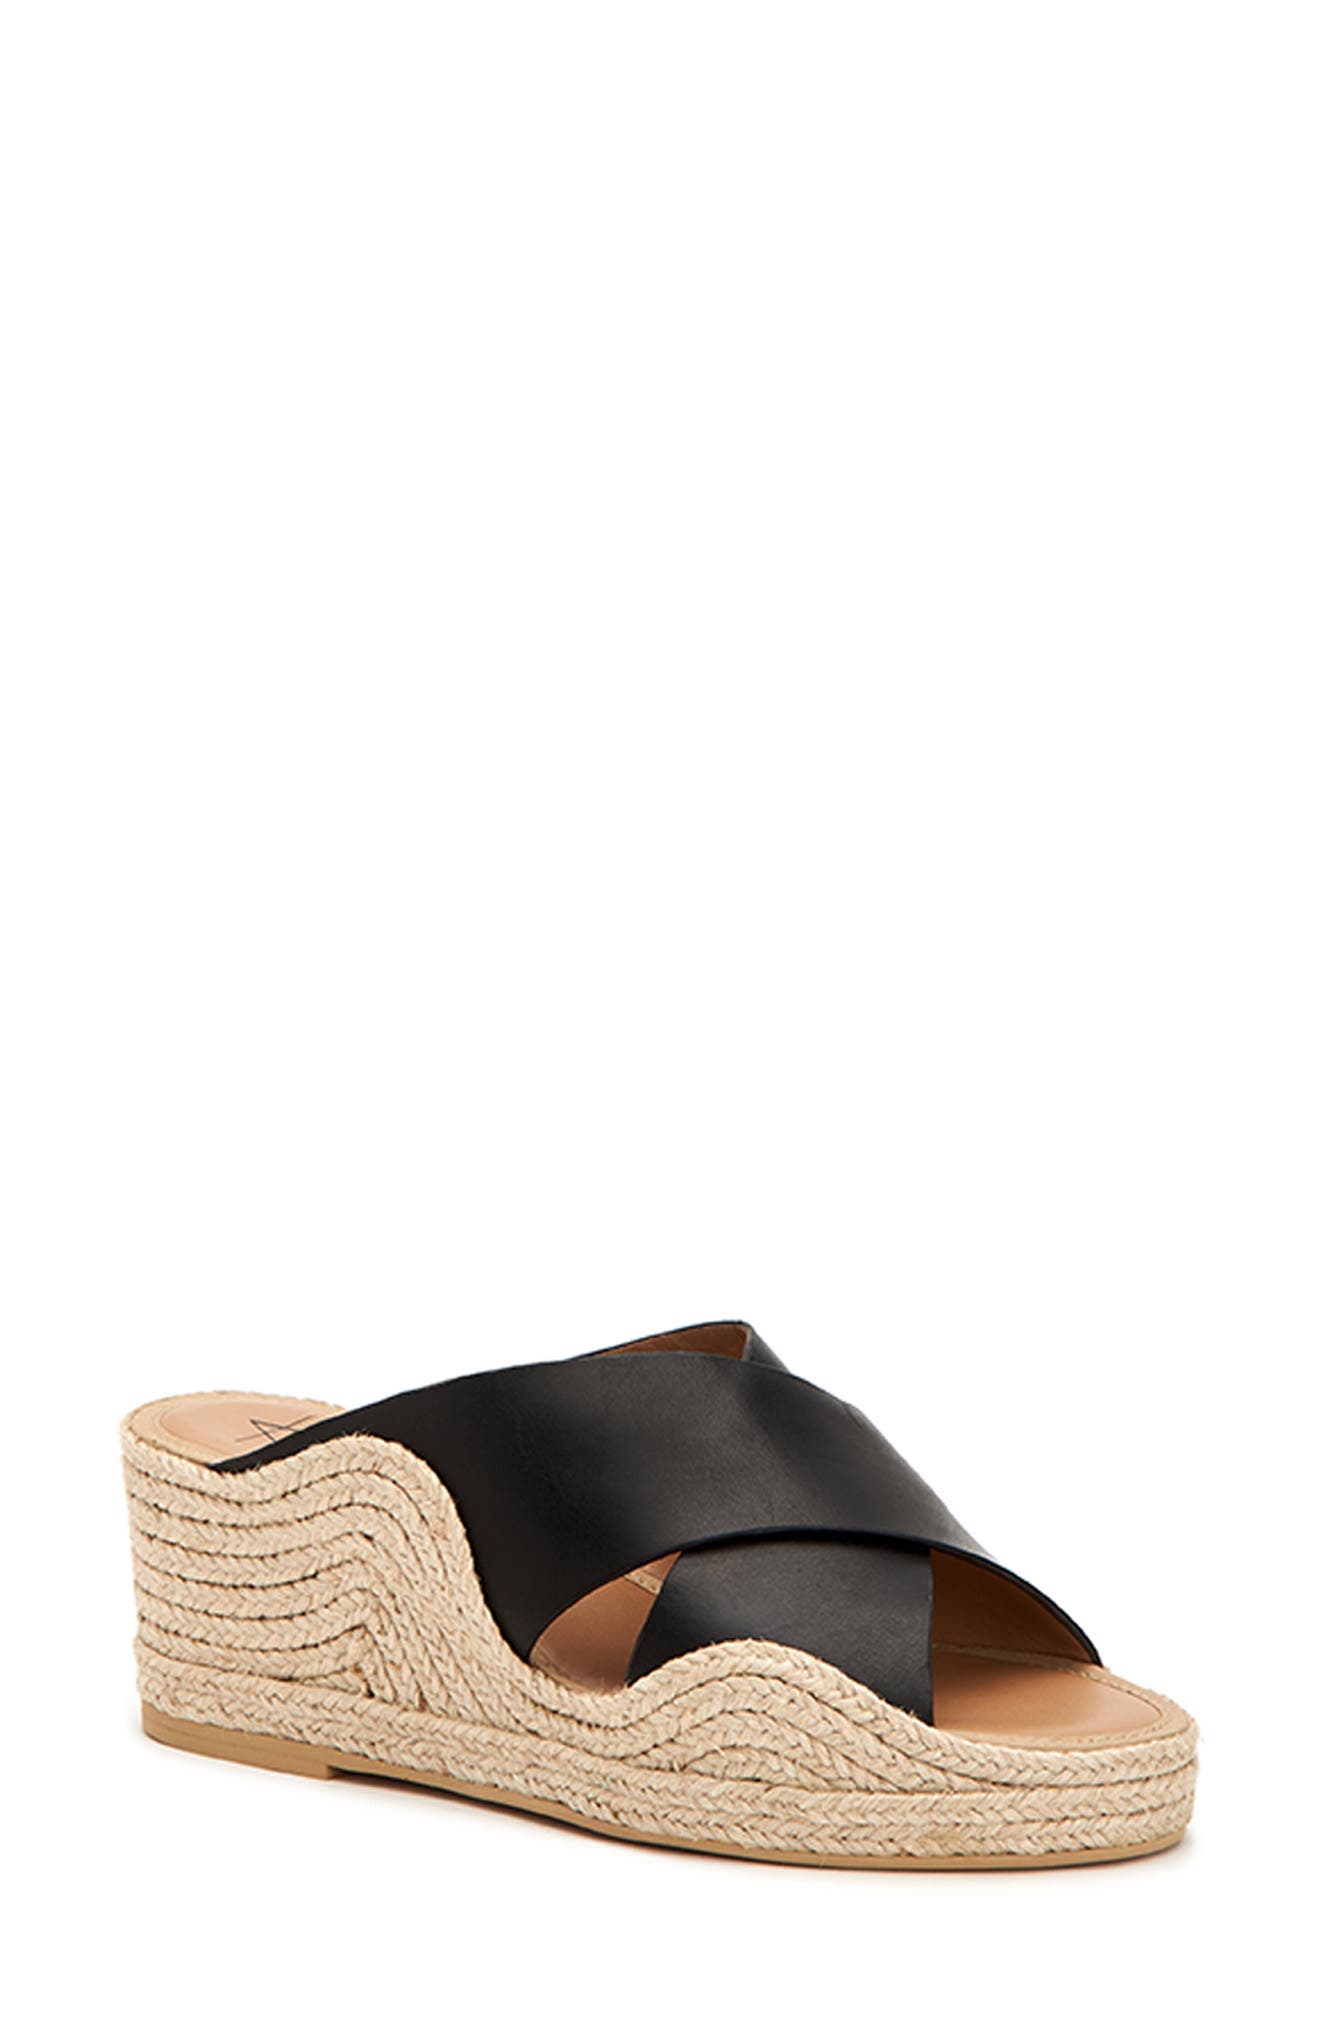 Aquatalia Marina Espadrille Wedge Sandal In Black Leather | ModeSens